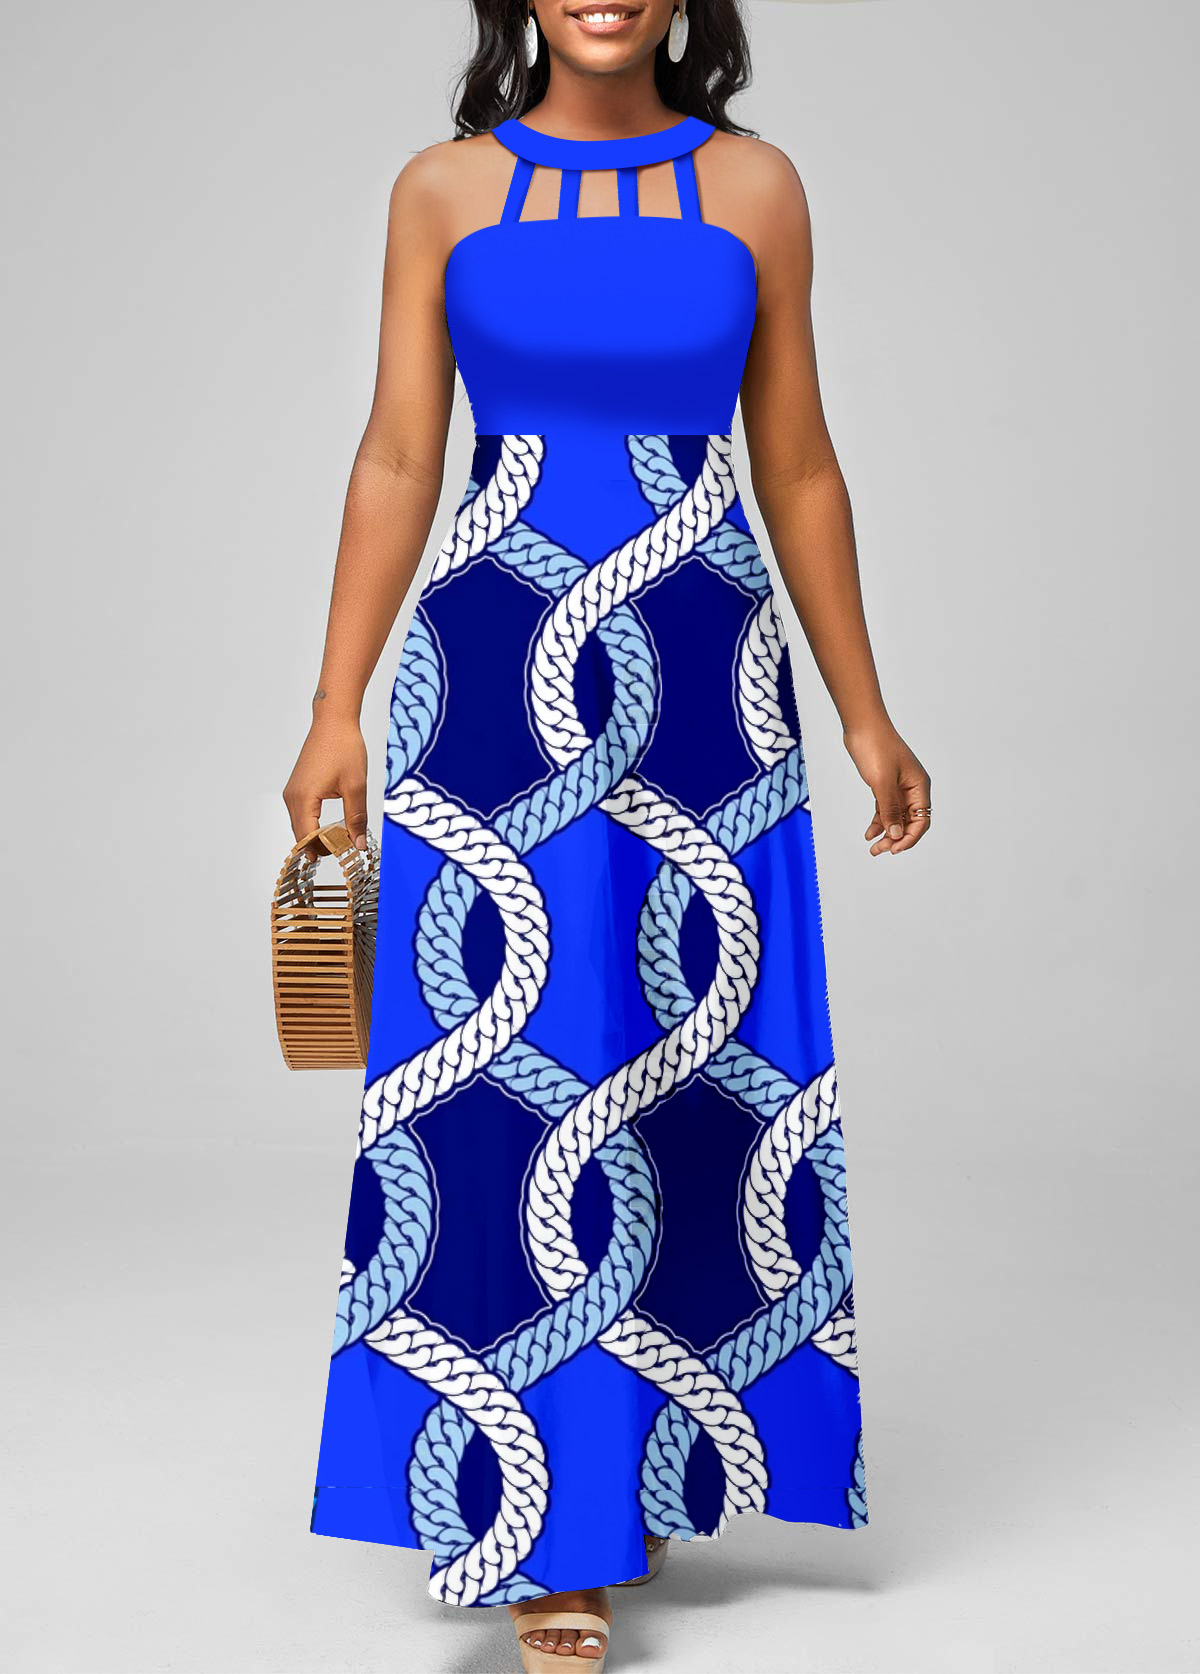 ROTITA Cage Neck Tribal Print Royal Blue Maxi Dress